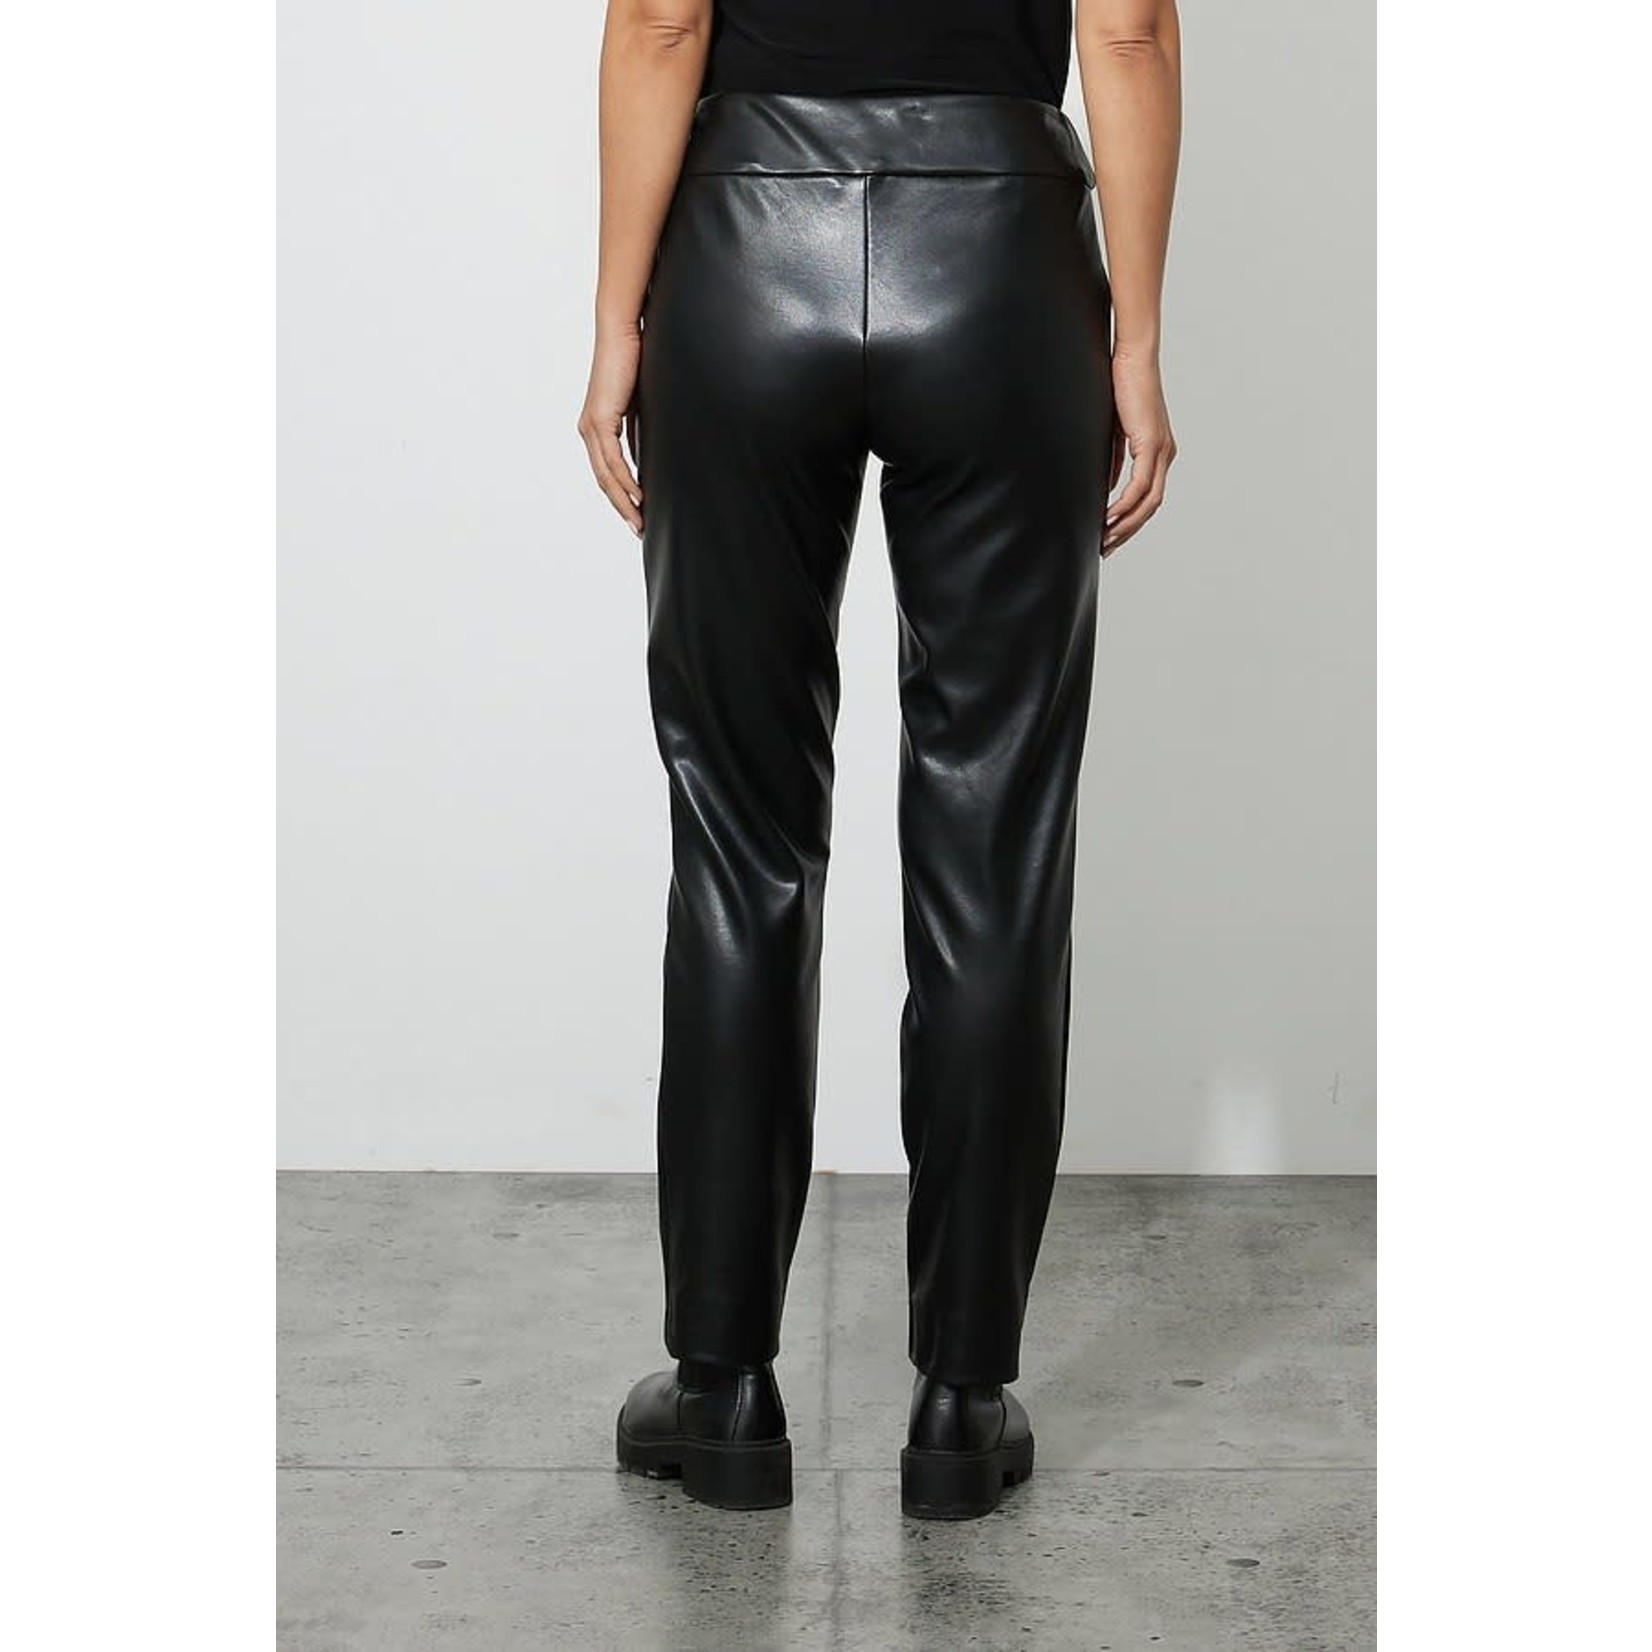 Joseph Ribkoff Black Faux Leather Pants Style 223196